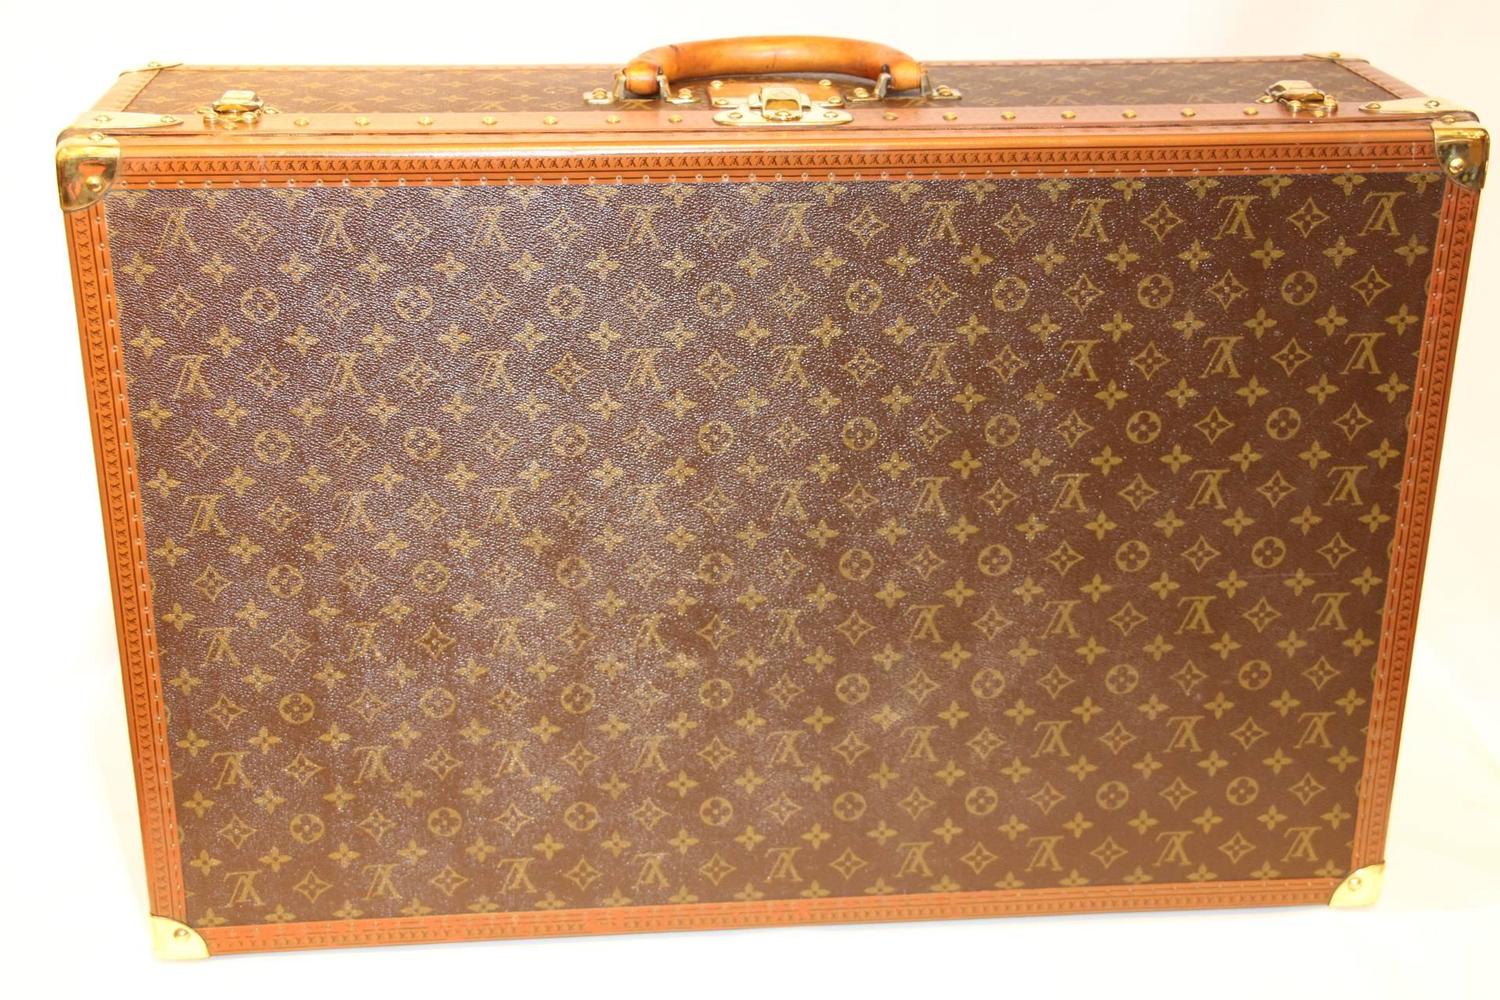 1980s Louis Vuitton Suitcase at 1stdibs